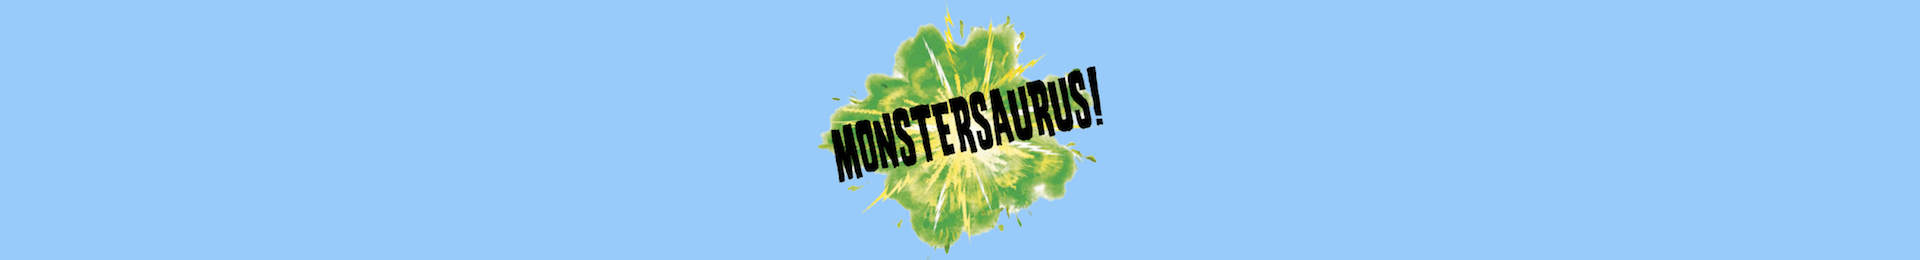 Monstersaurus banner image